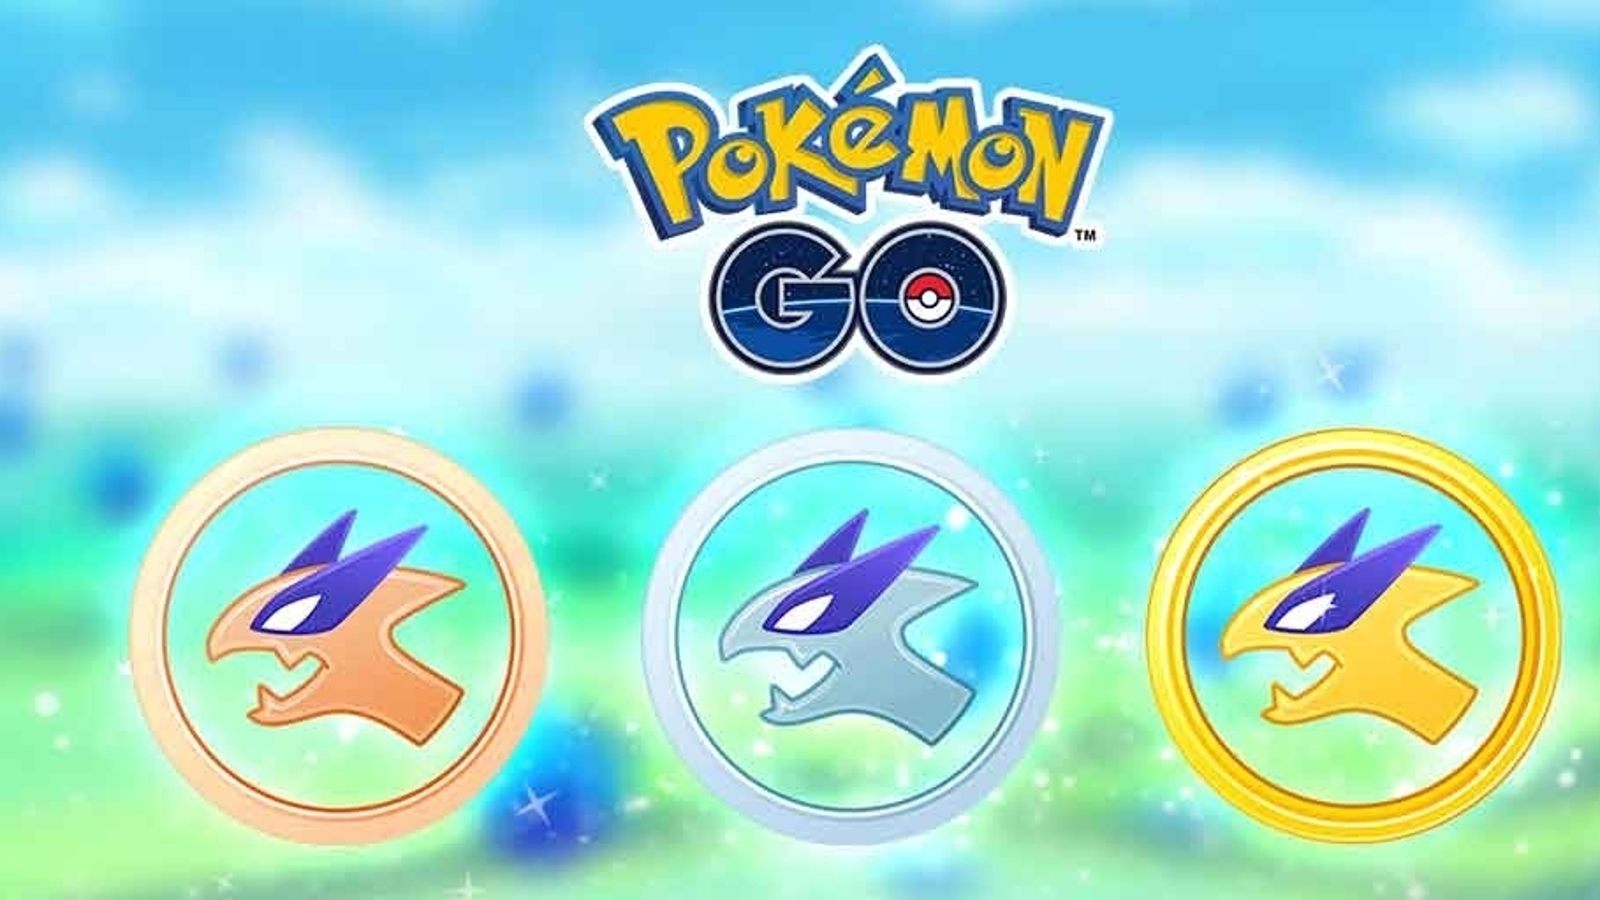 Pokémon Go - Raids de Cresselia, Kyogre e Groudon